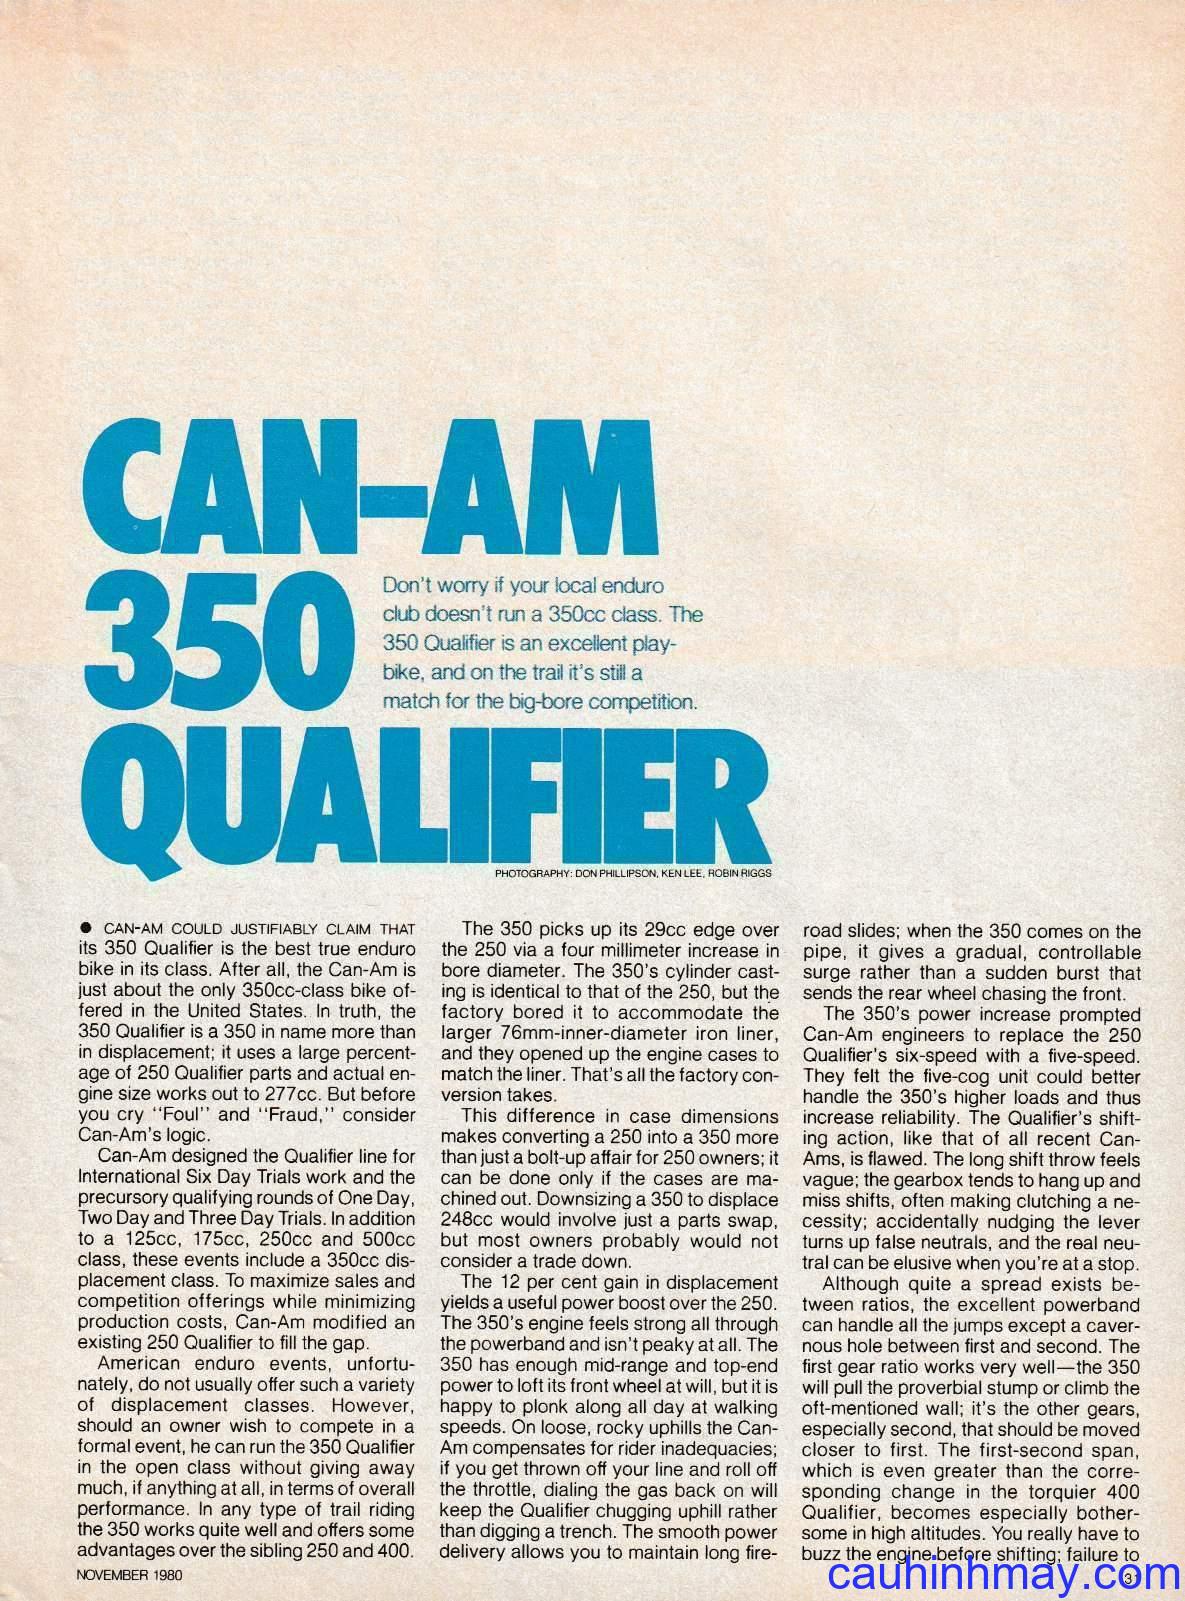 1980 CAN AM 350 QUALIFIER - cauhinhmay.com